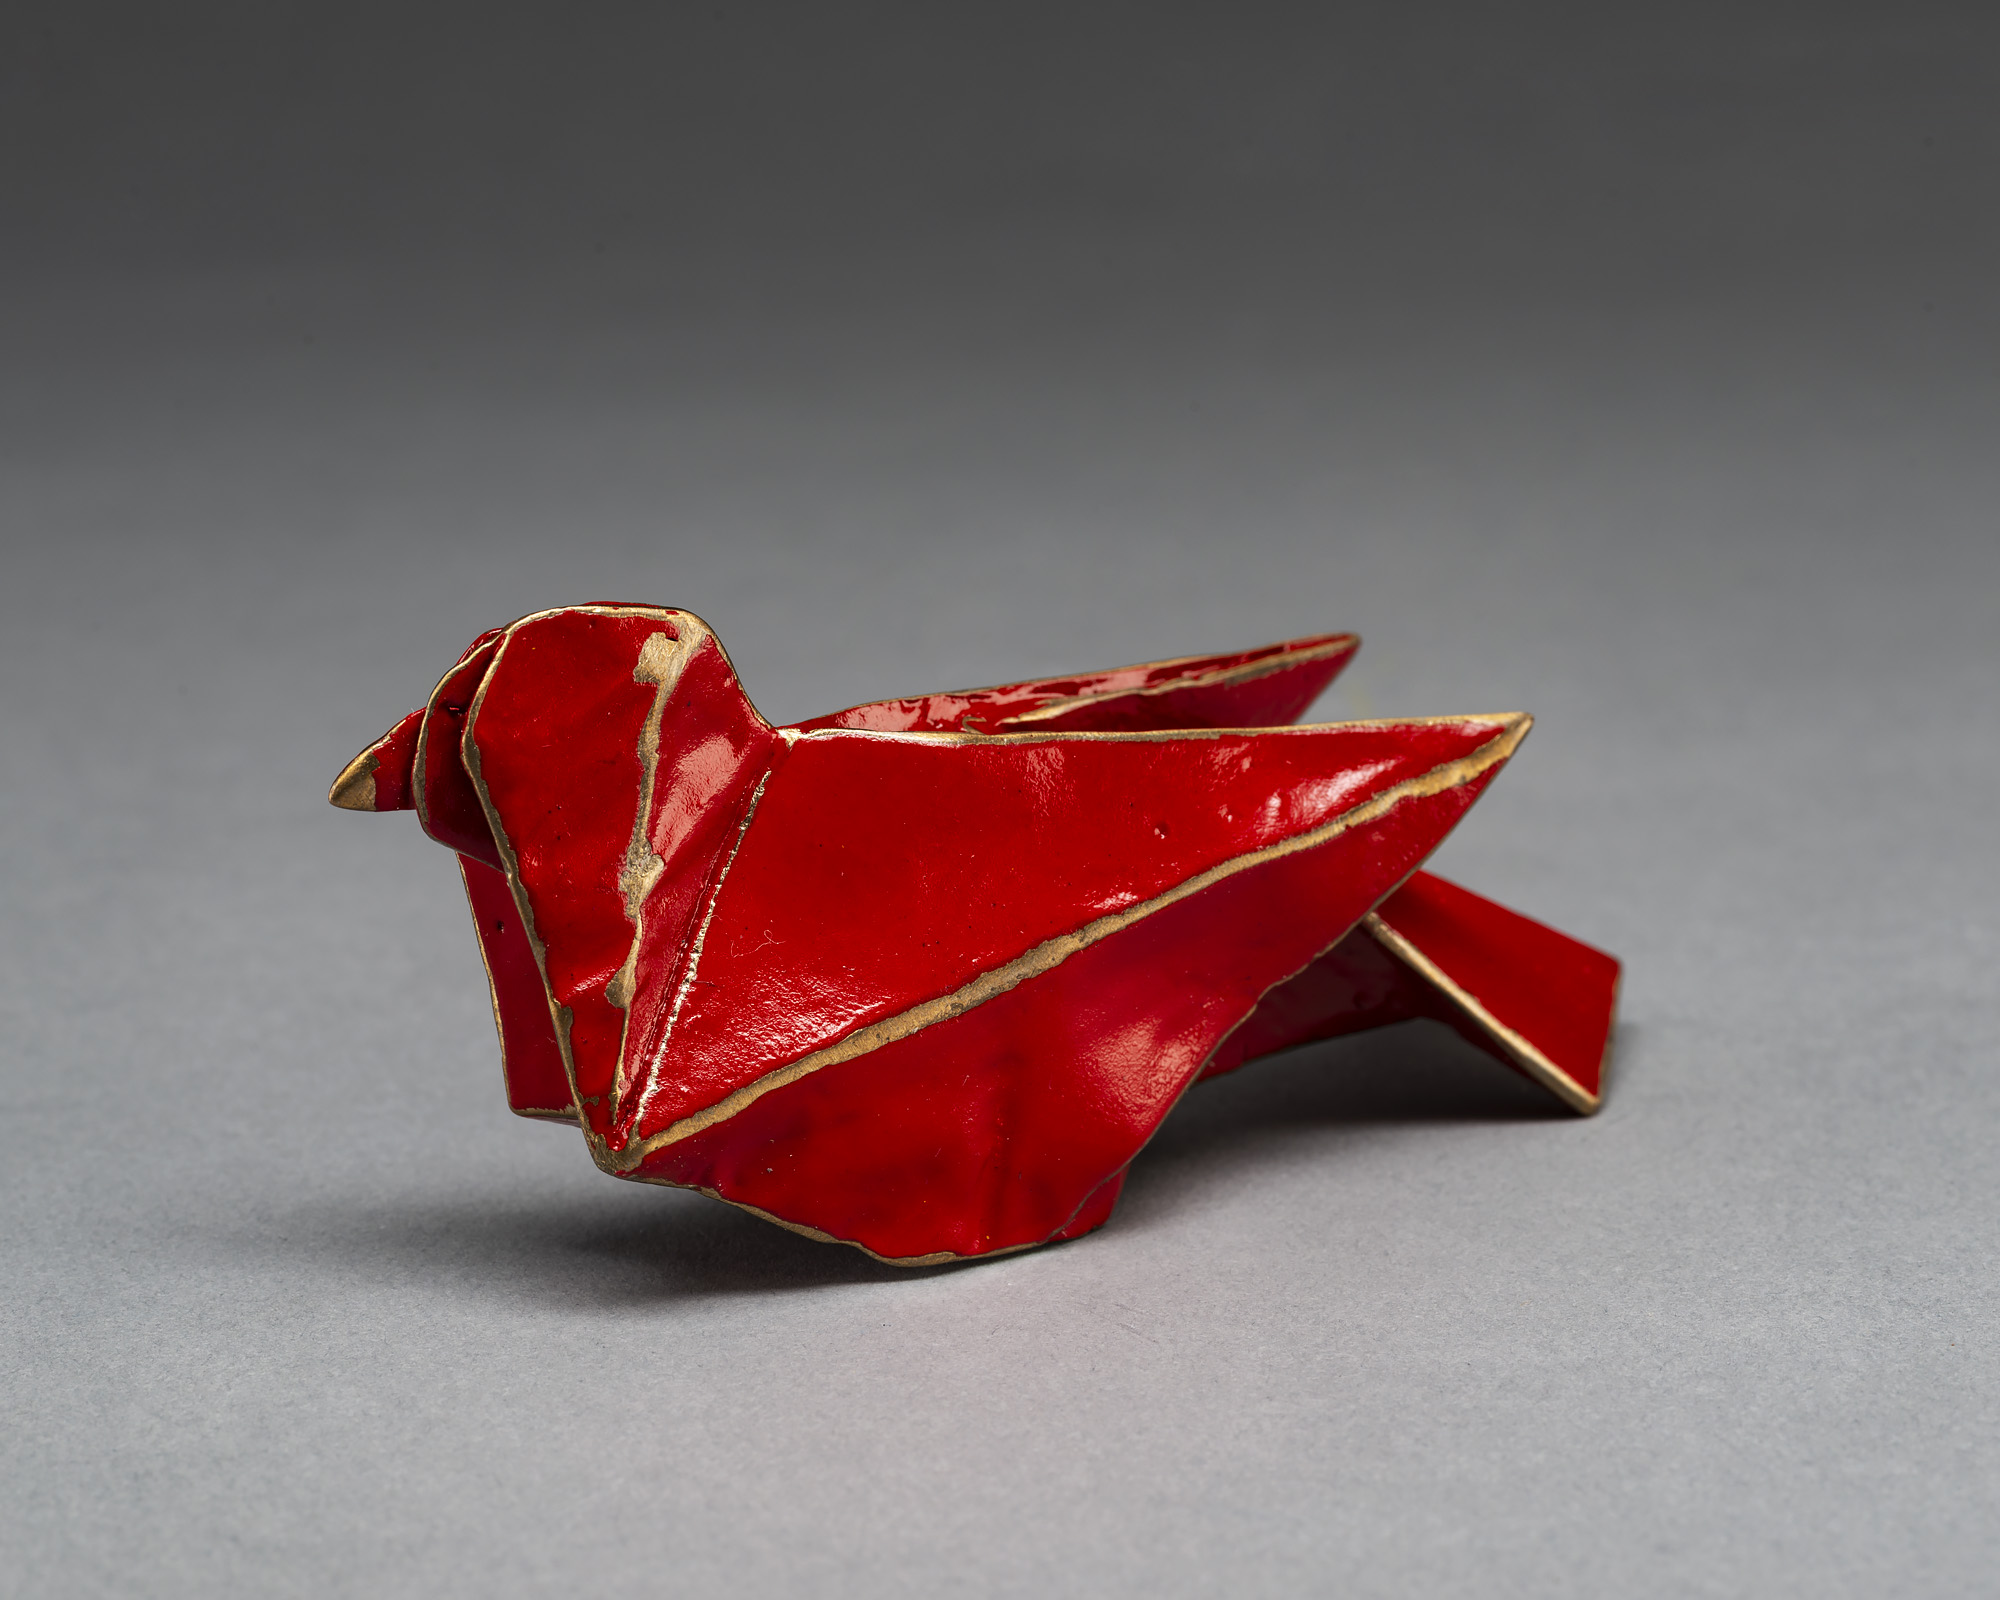 red origami bird sculpture